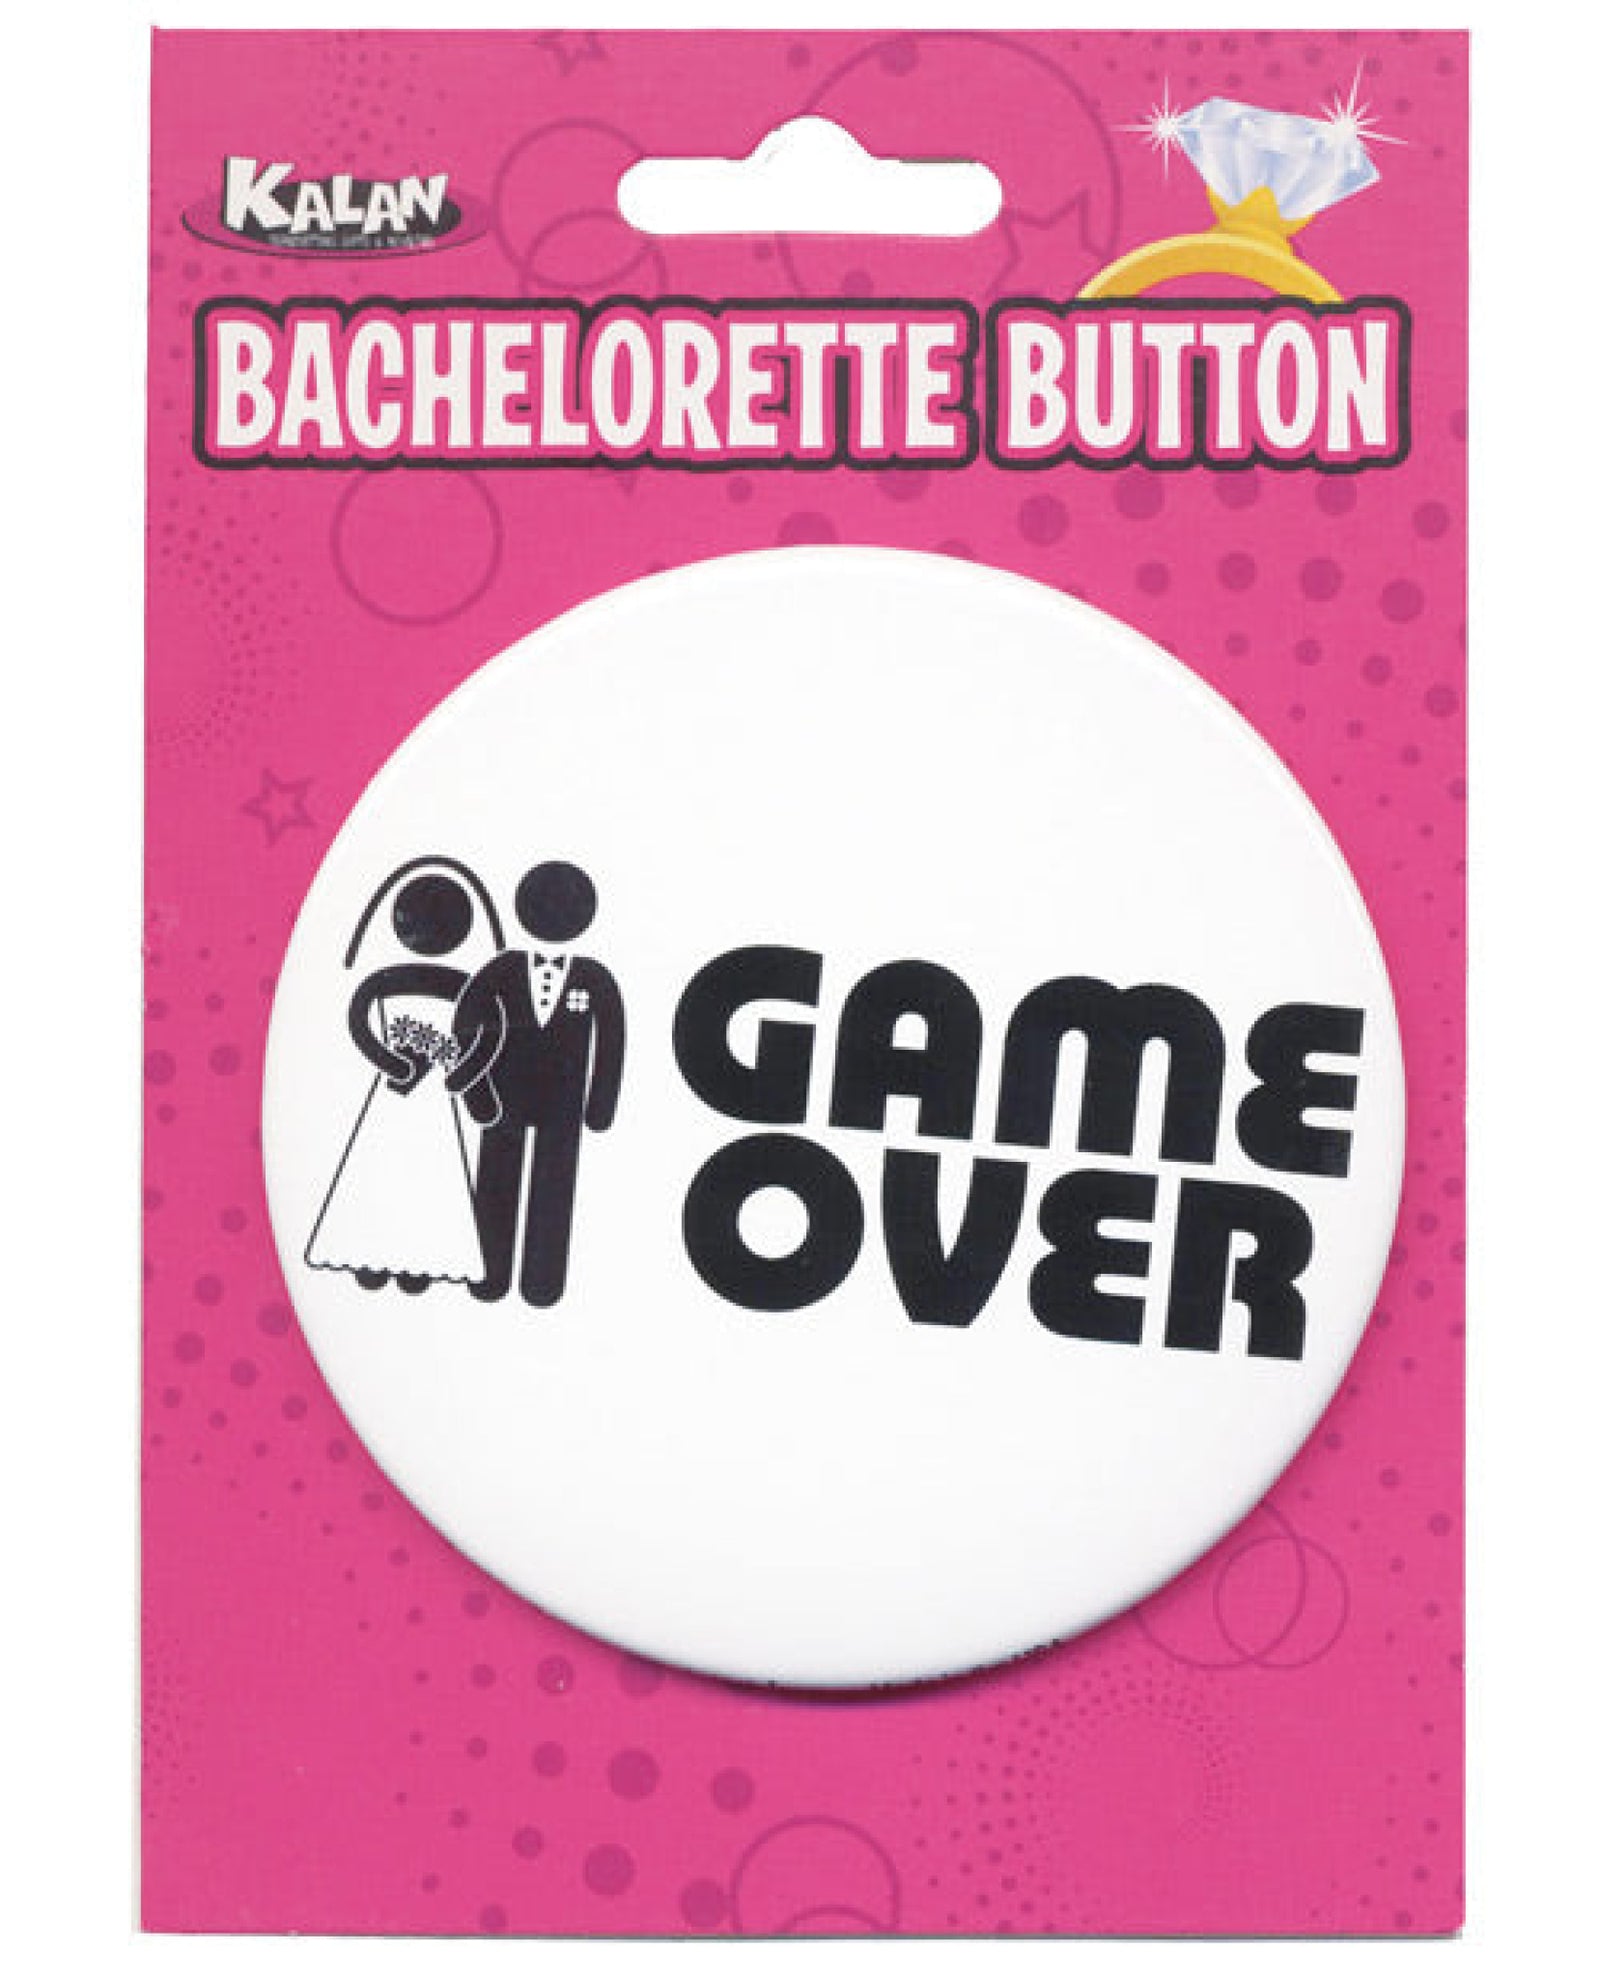 Bachelorette Button - Game Over Kalan